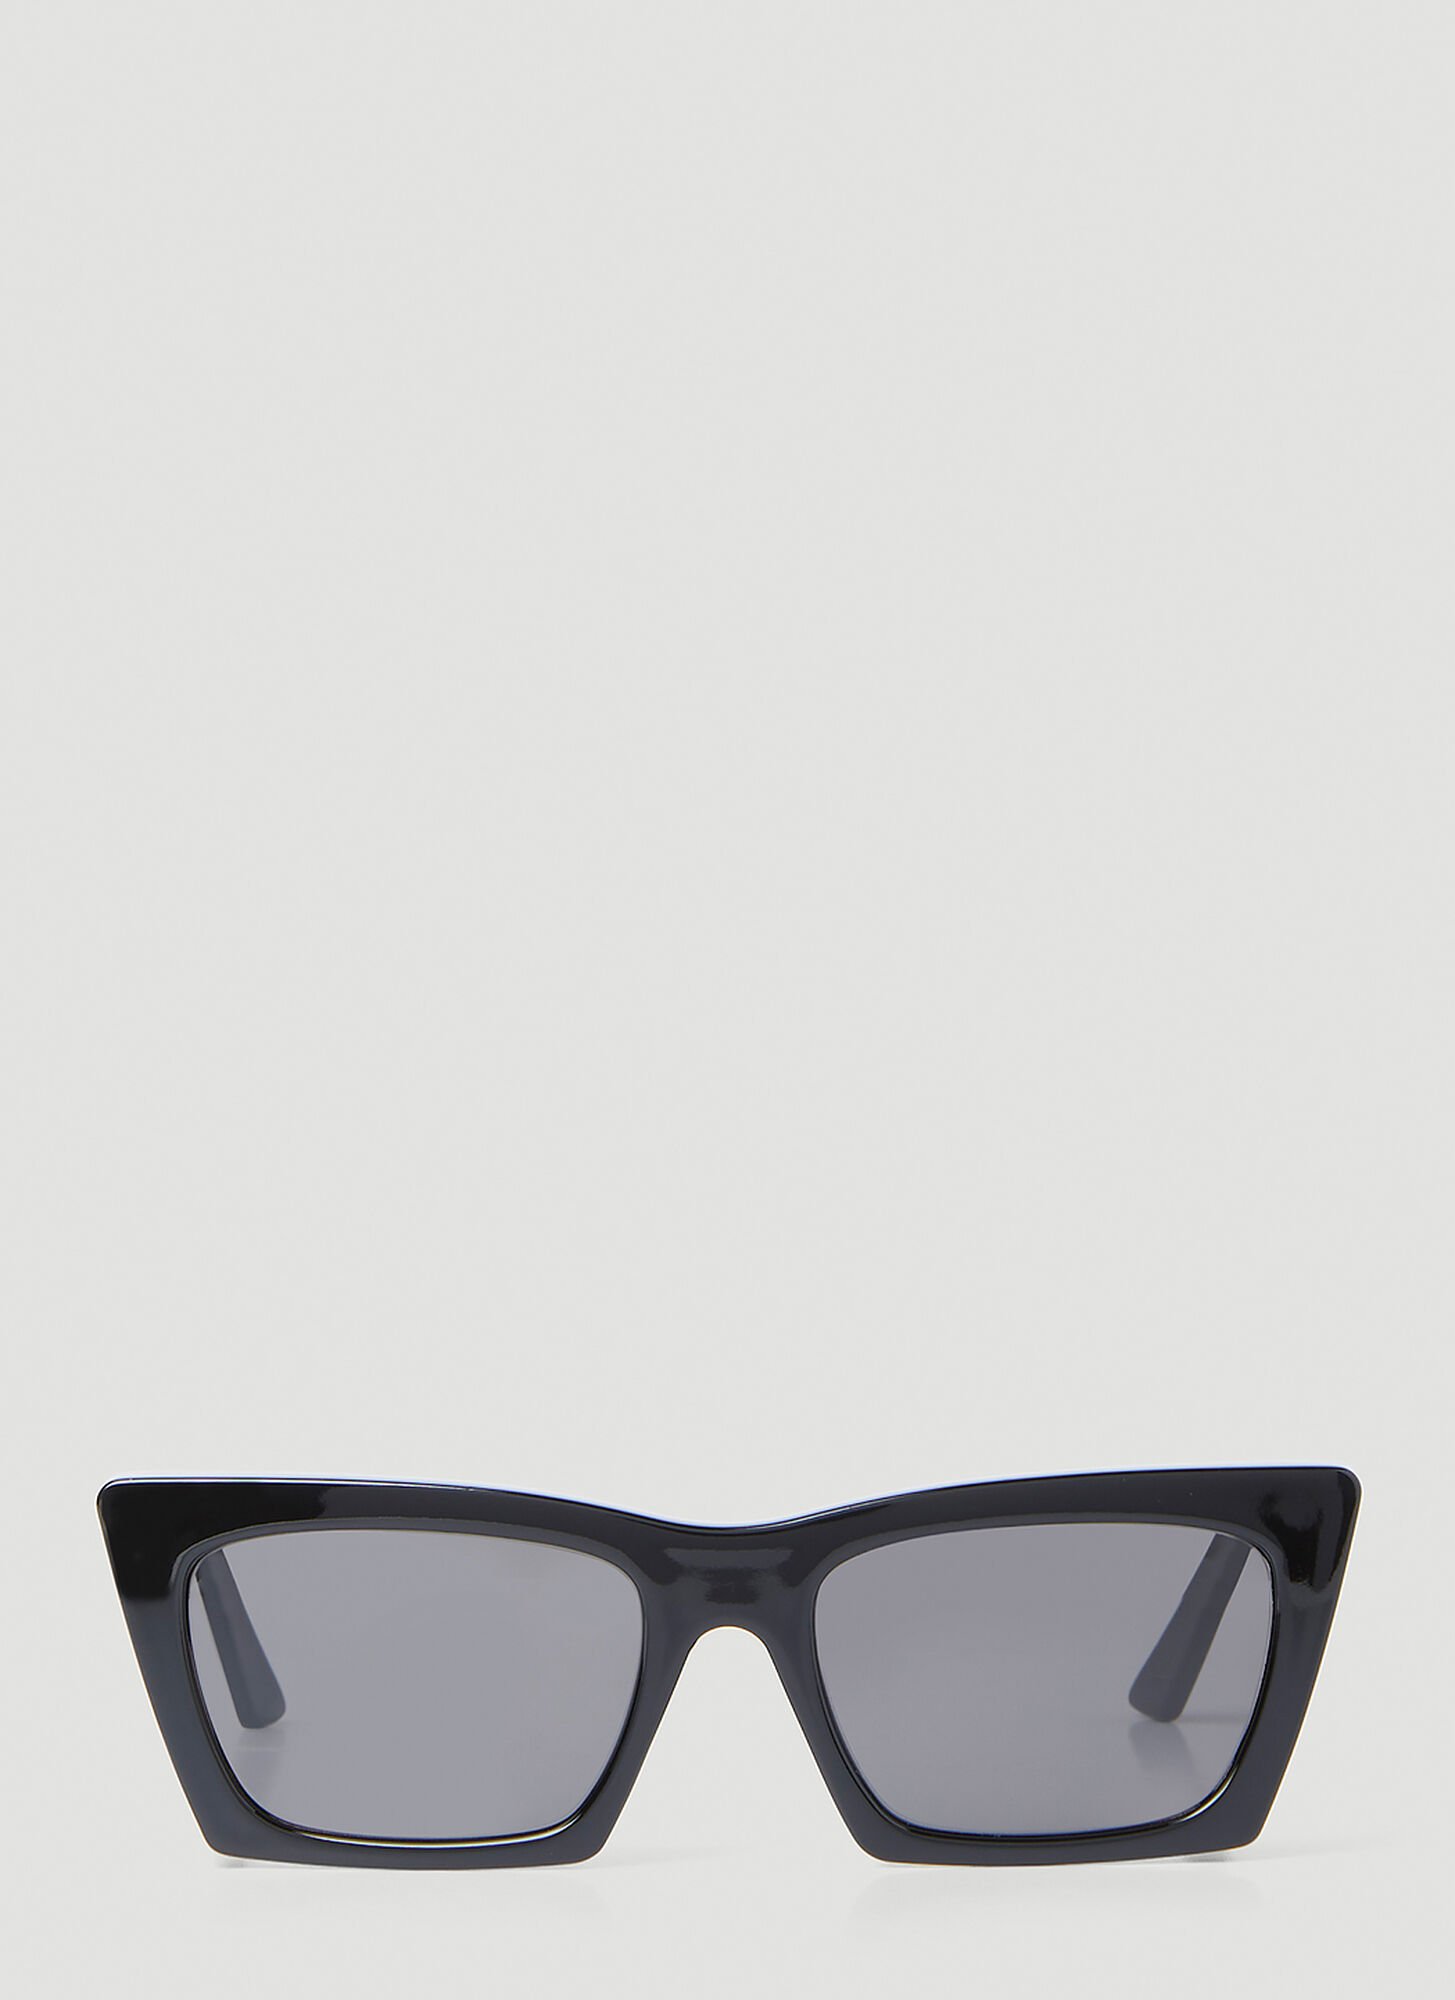 Clean Waves Type 4 Cat Eye Sunglasses Unisex Black